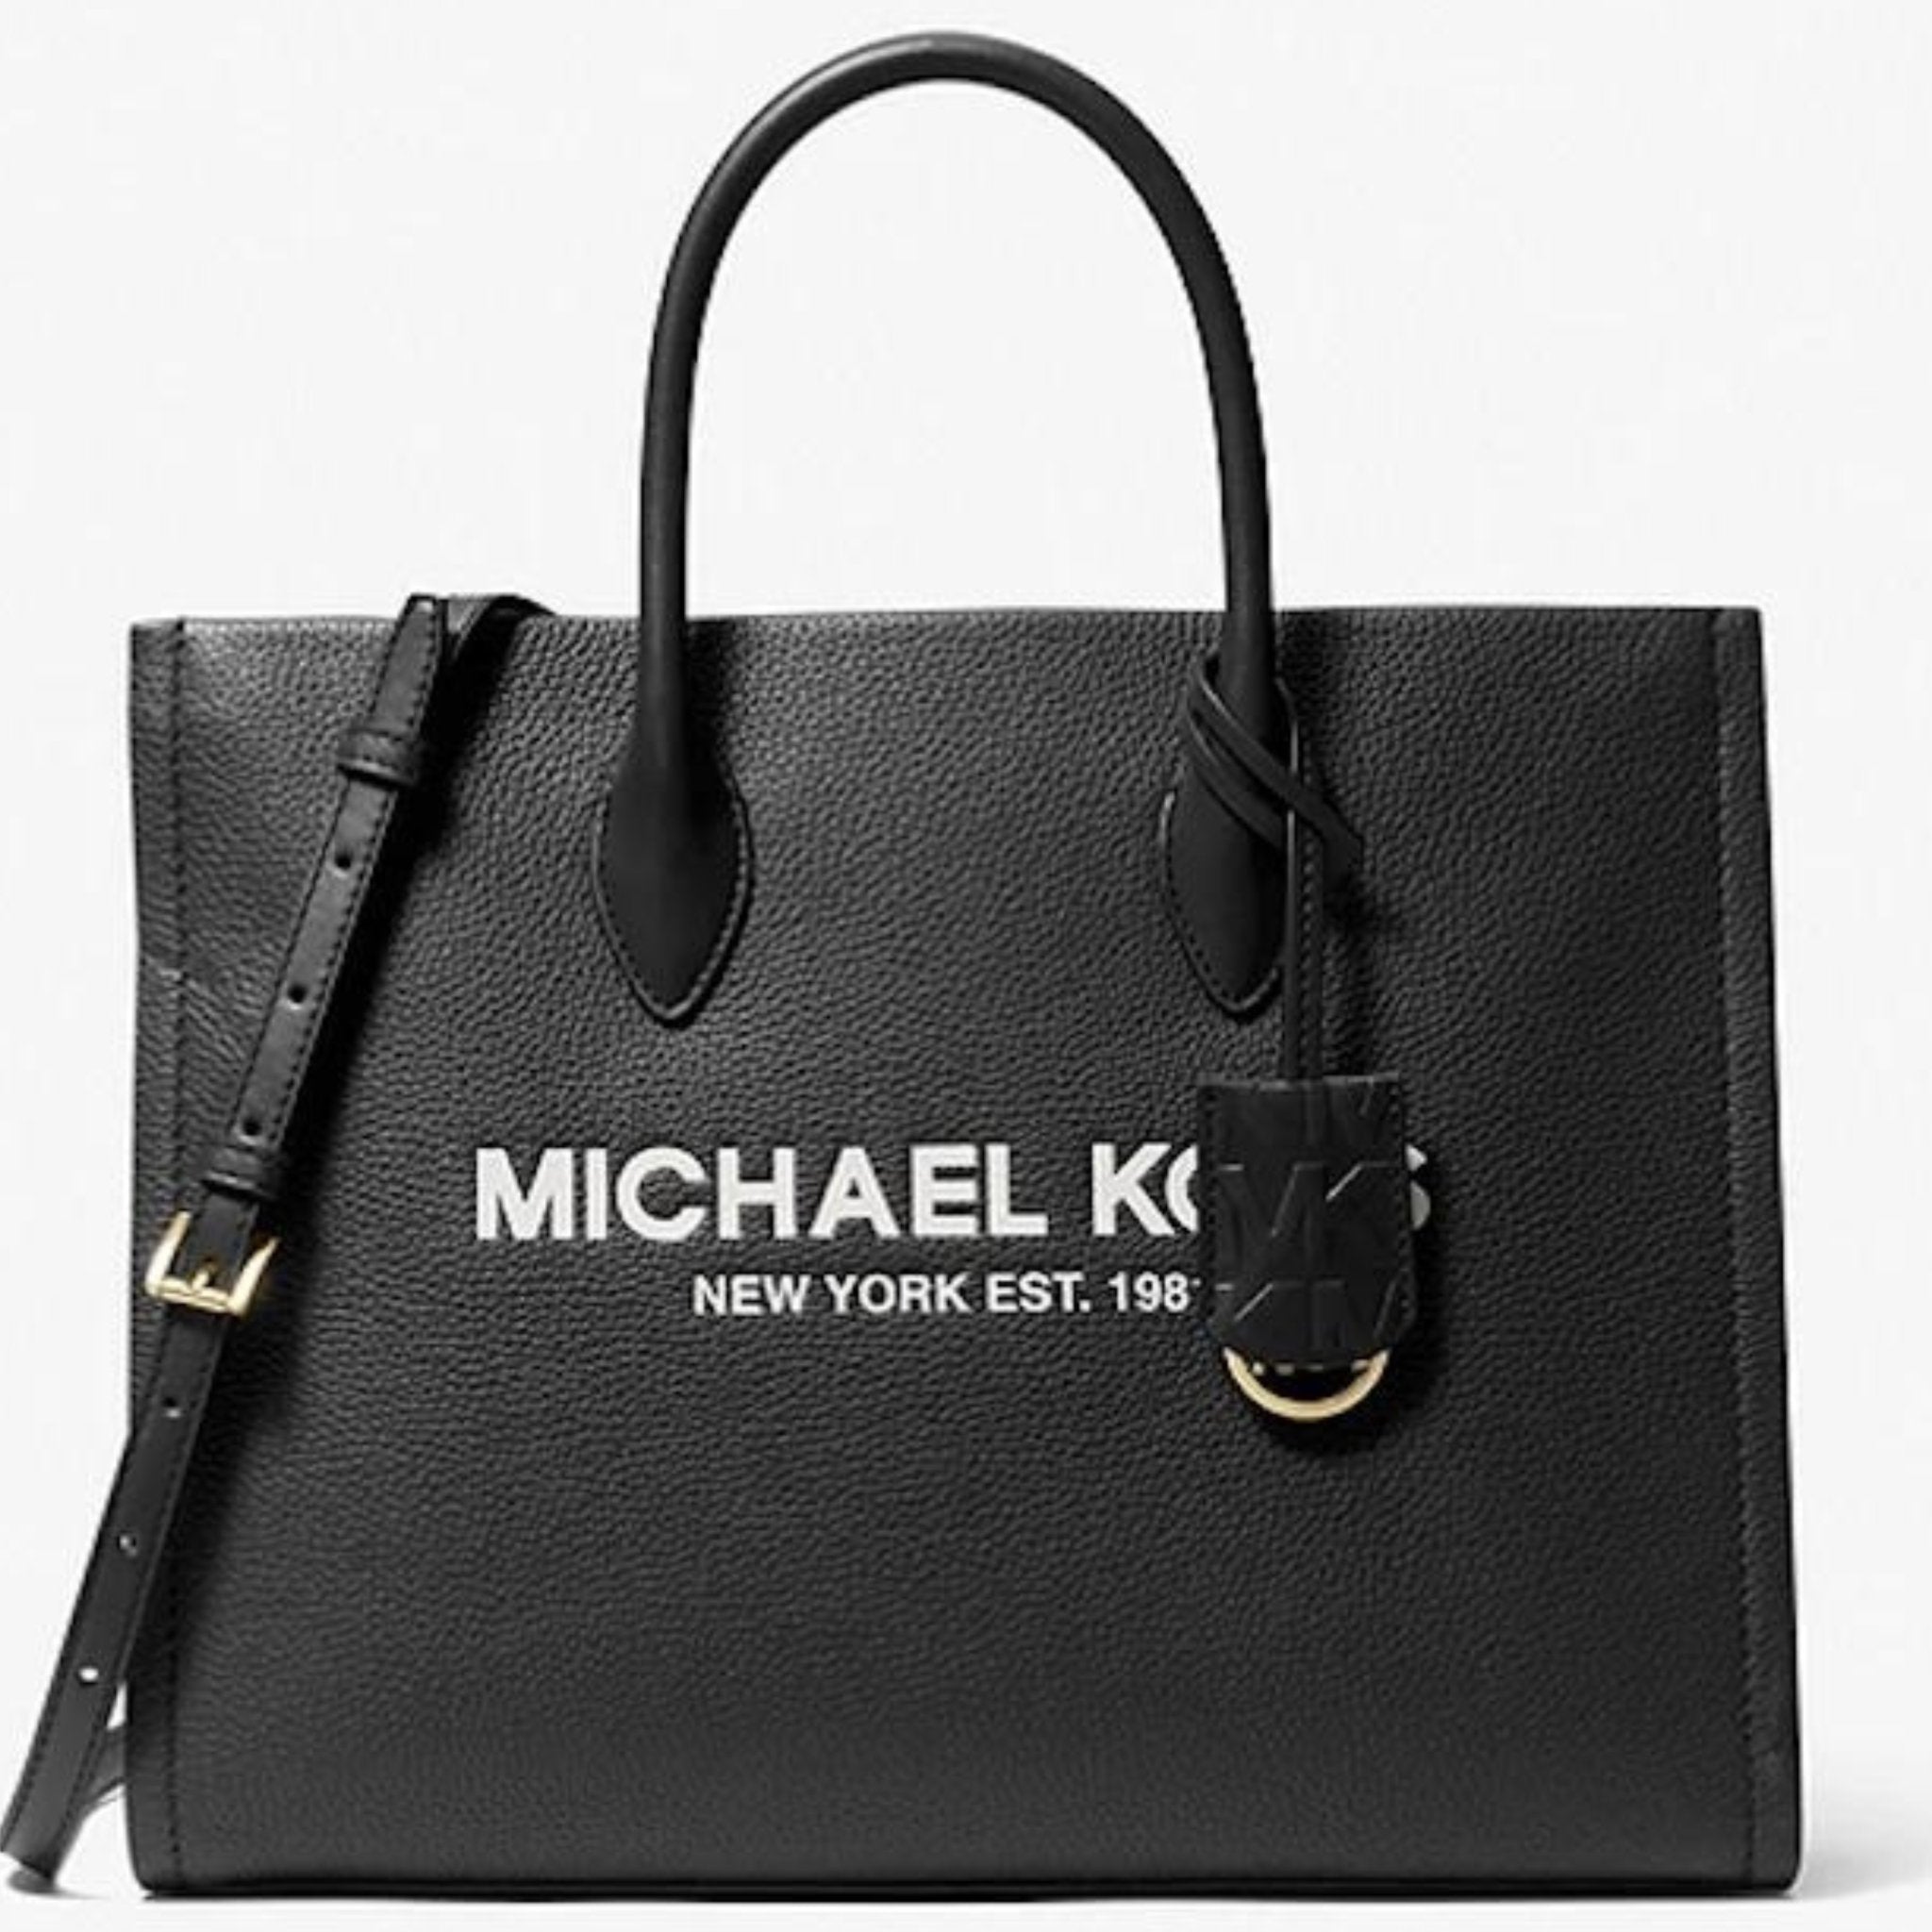 Best Deals for Michael Kors Bags Outlet Sale  Poshmark